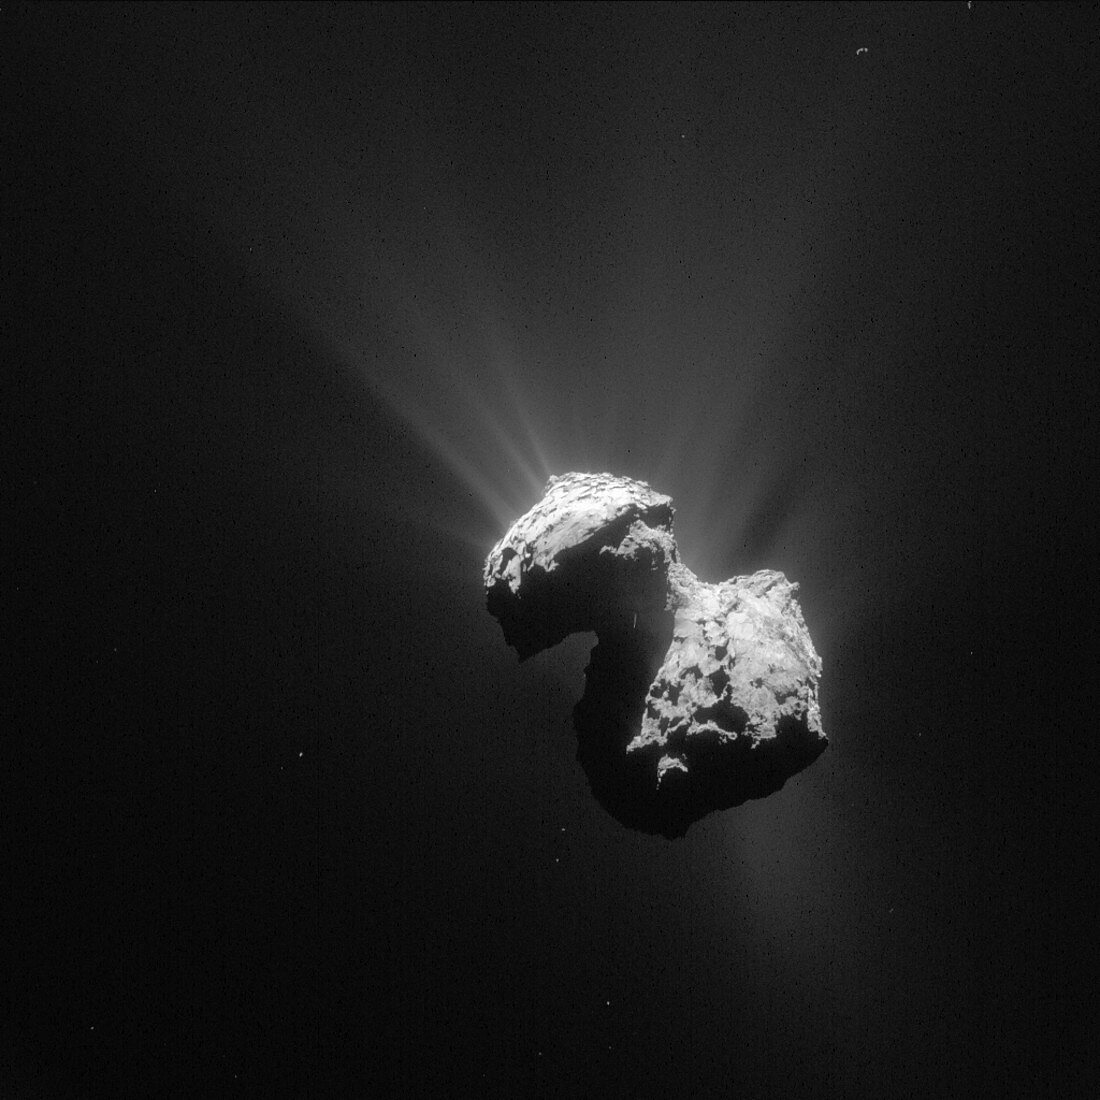 Comet Churyumov-Gerasimenko,July 2015